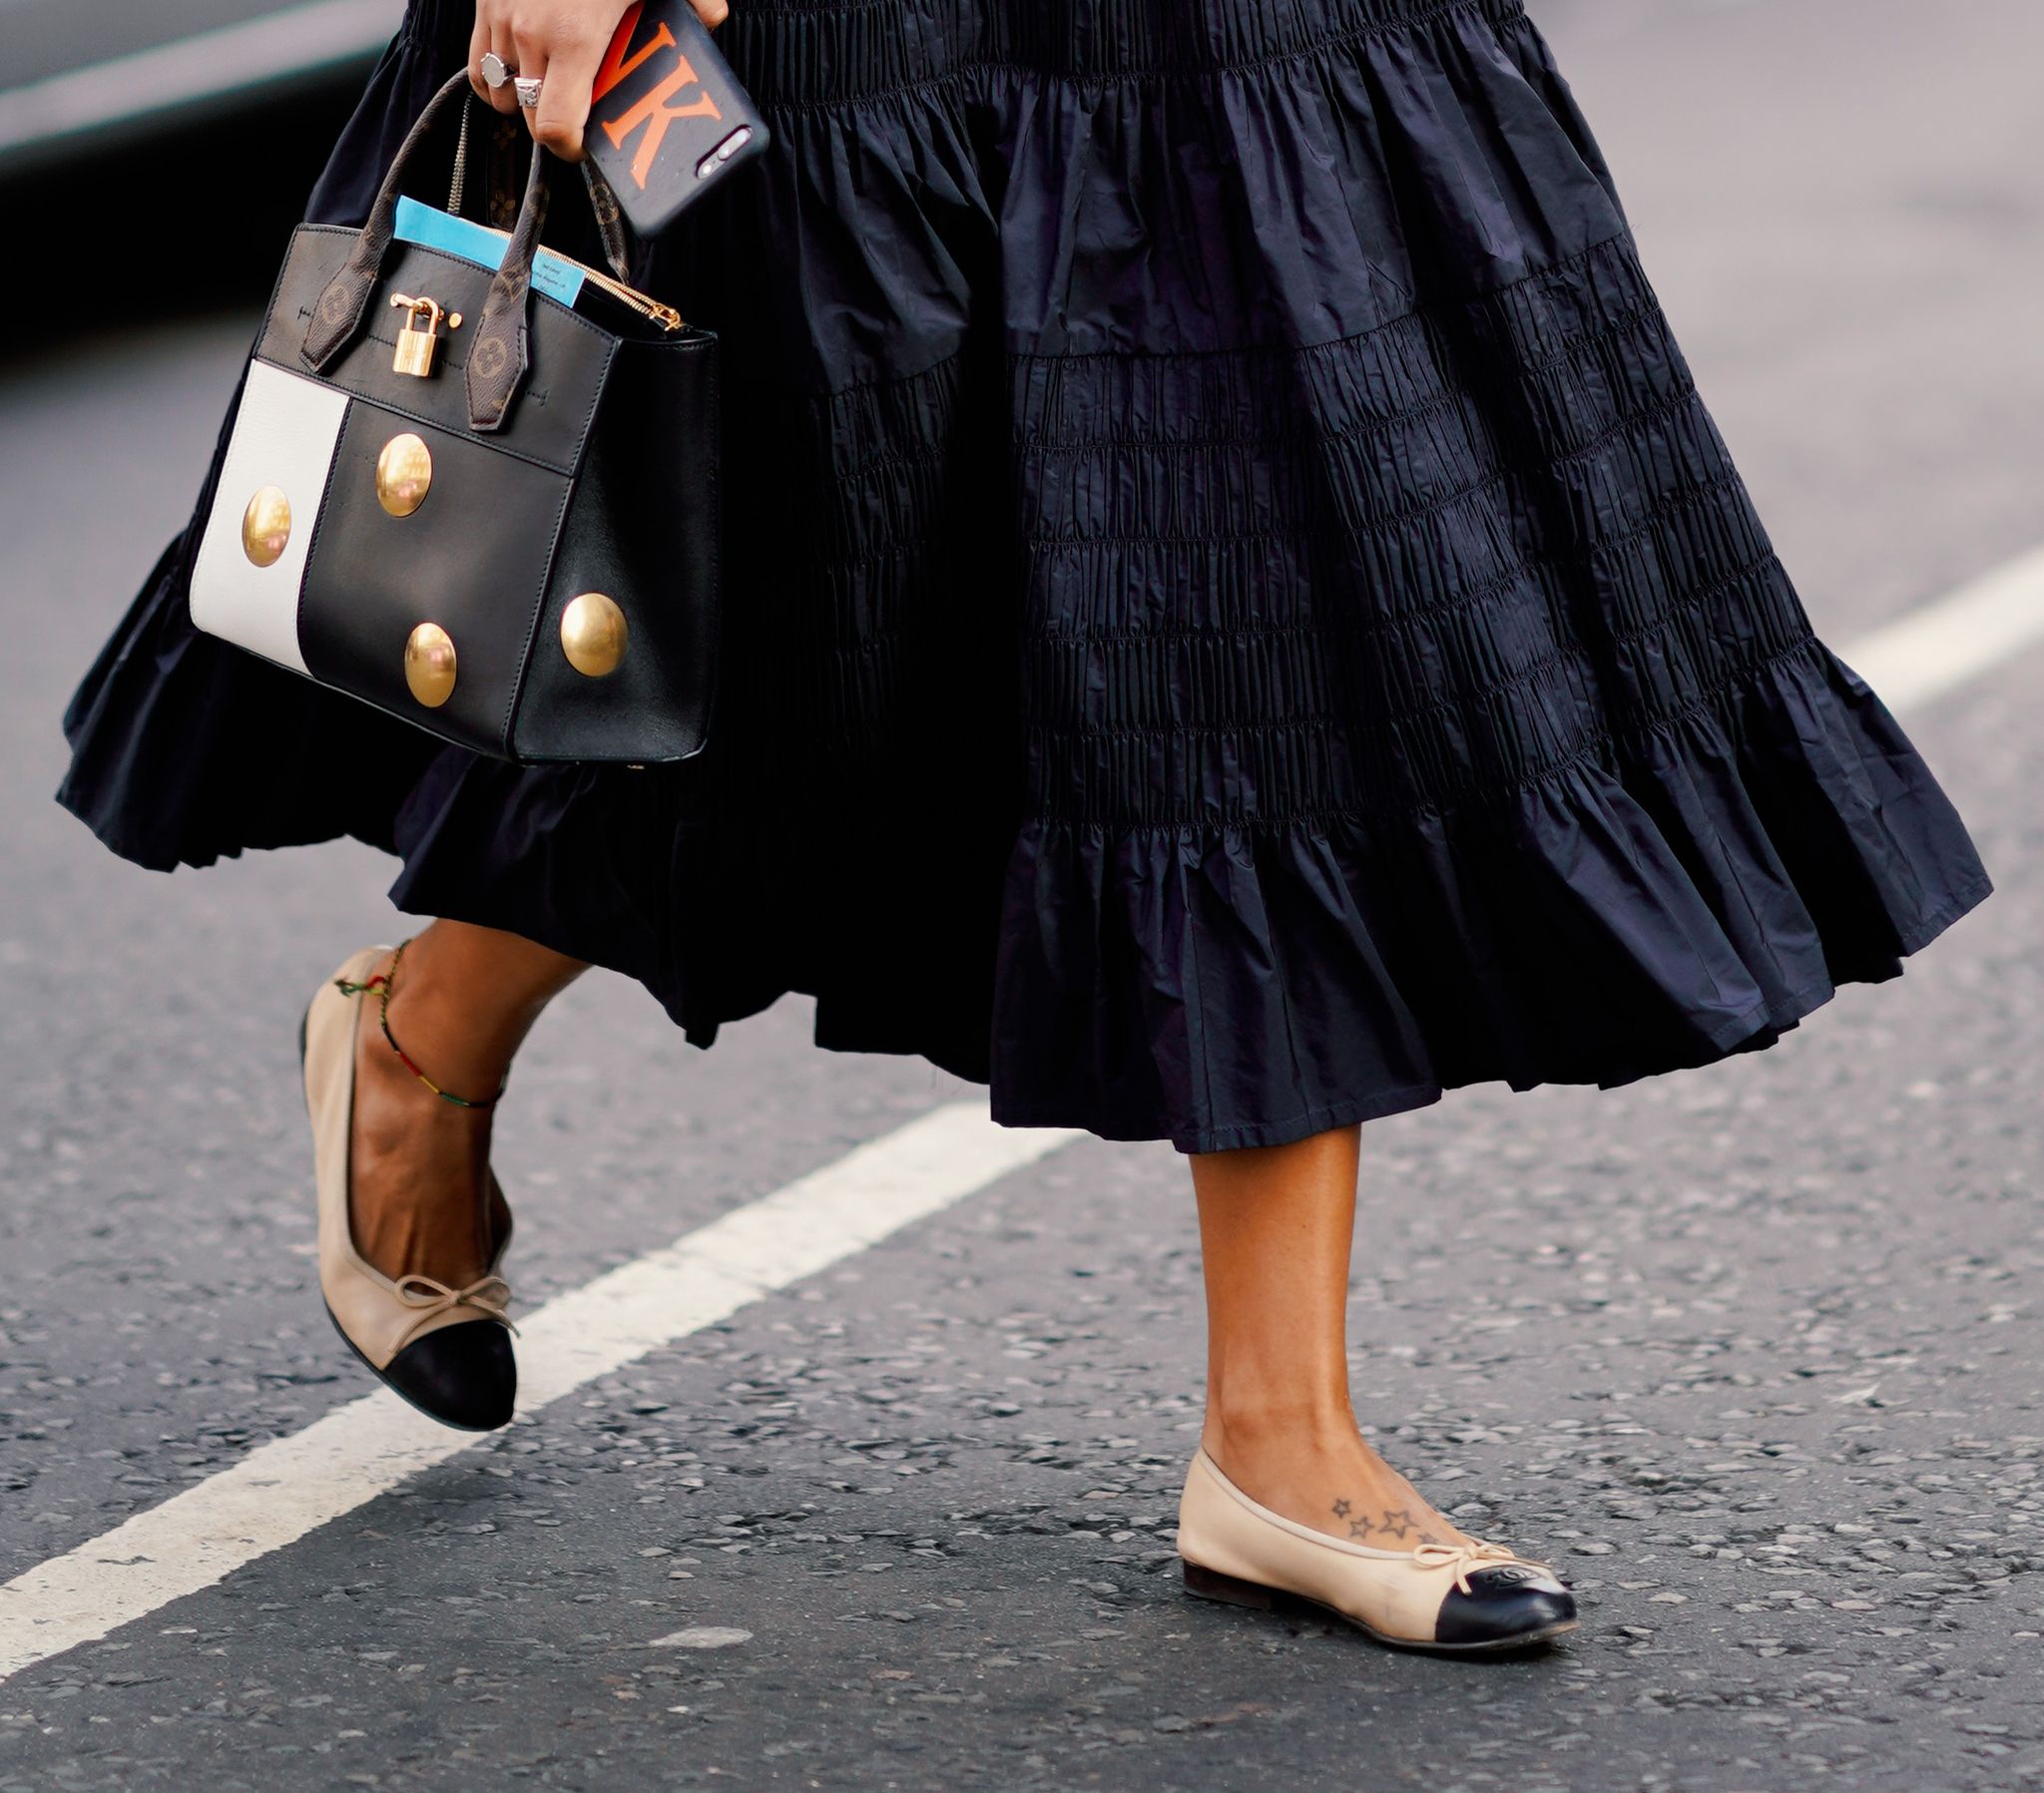 Chanel ballet flat dupe: M&S £39.50 leather pumps look designer